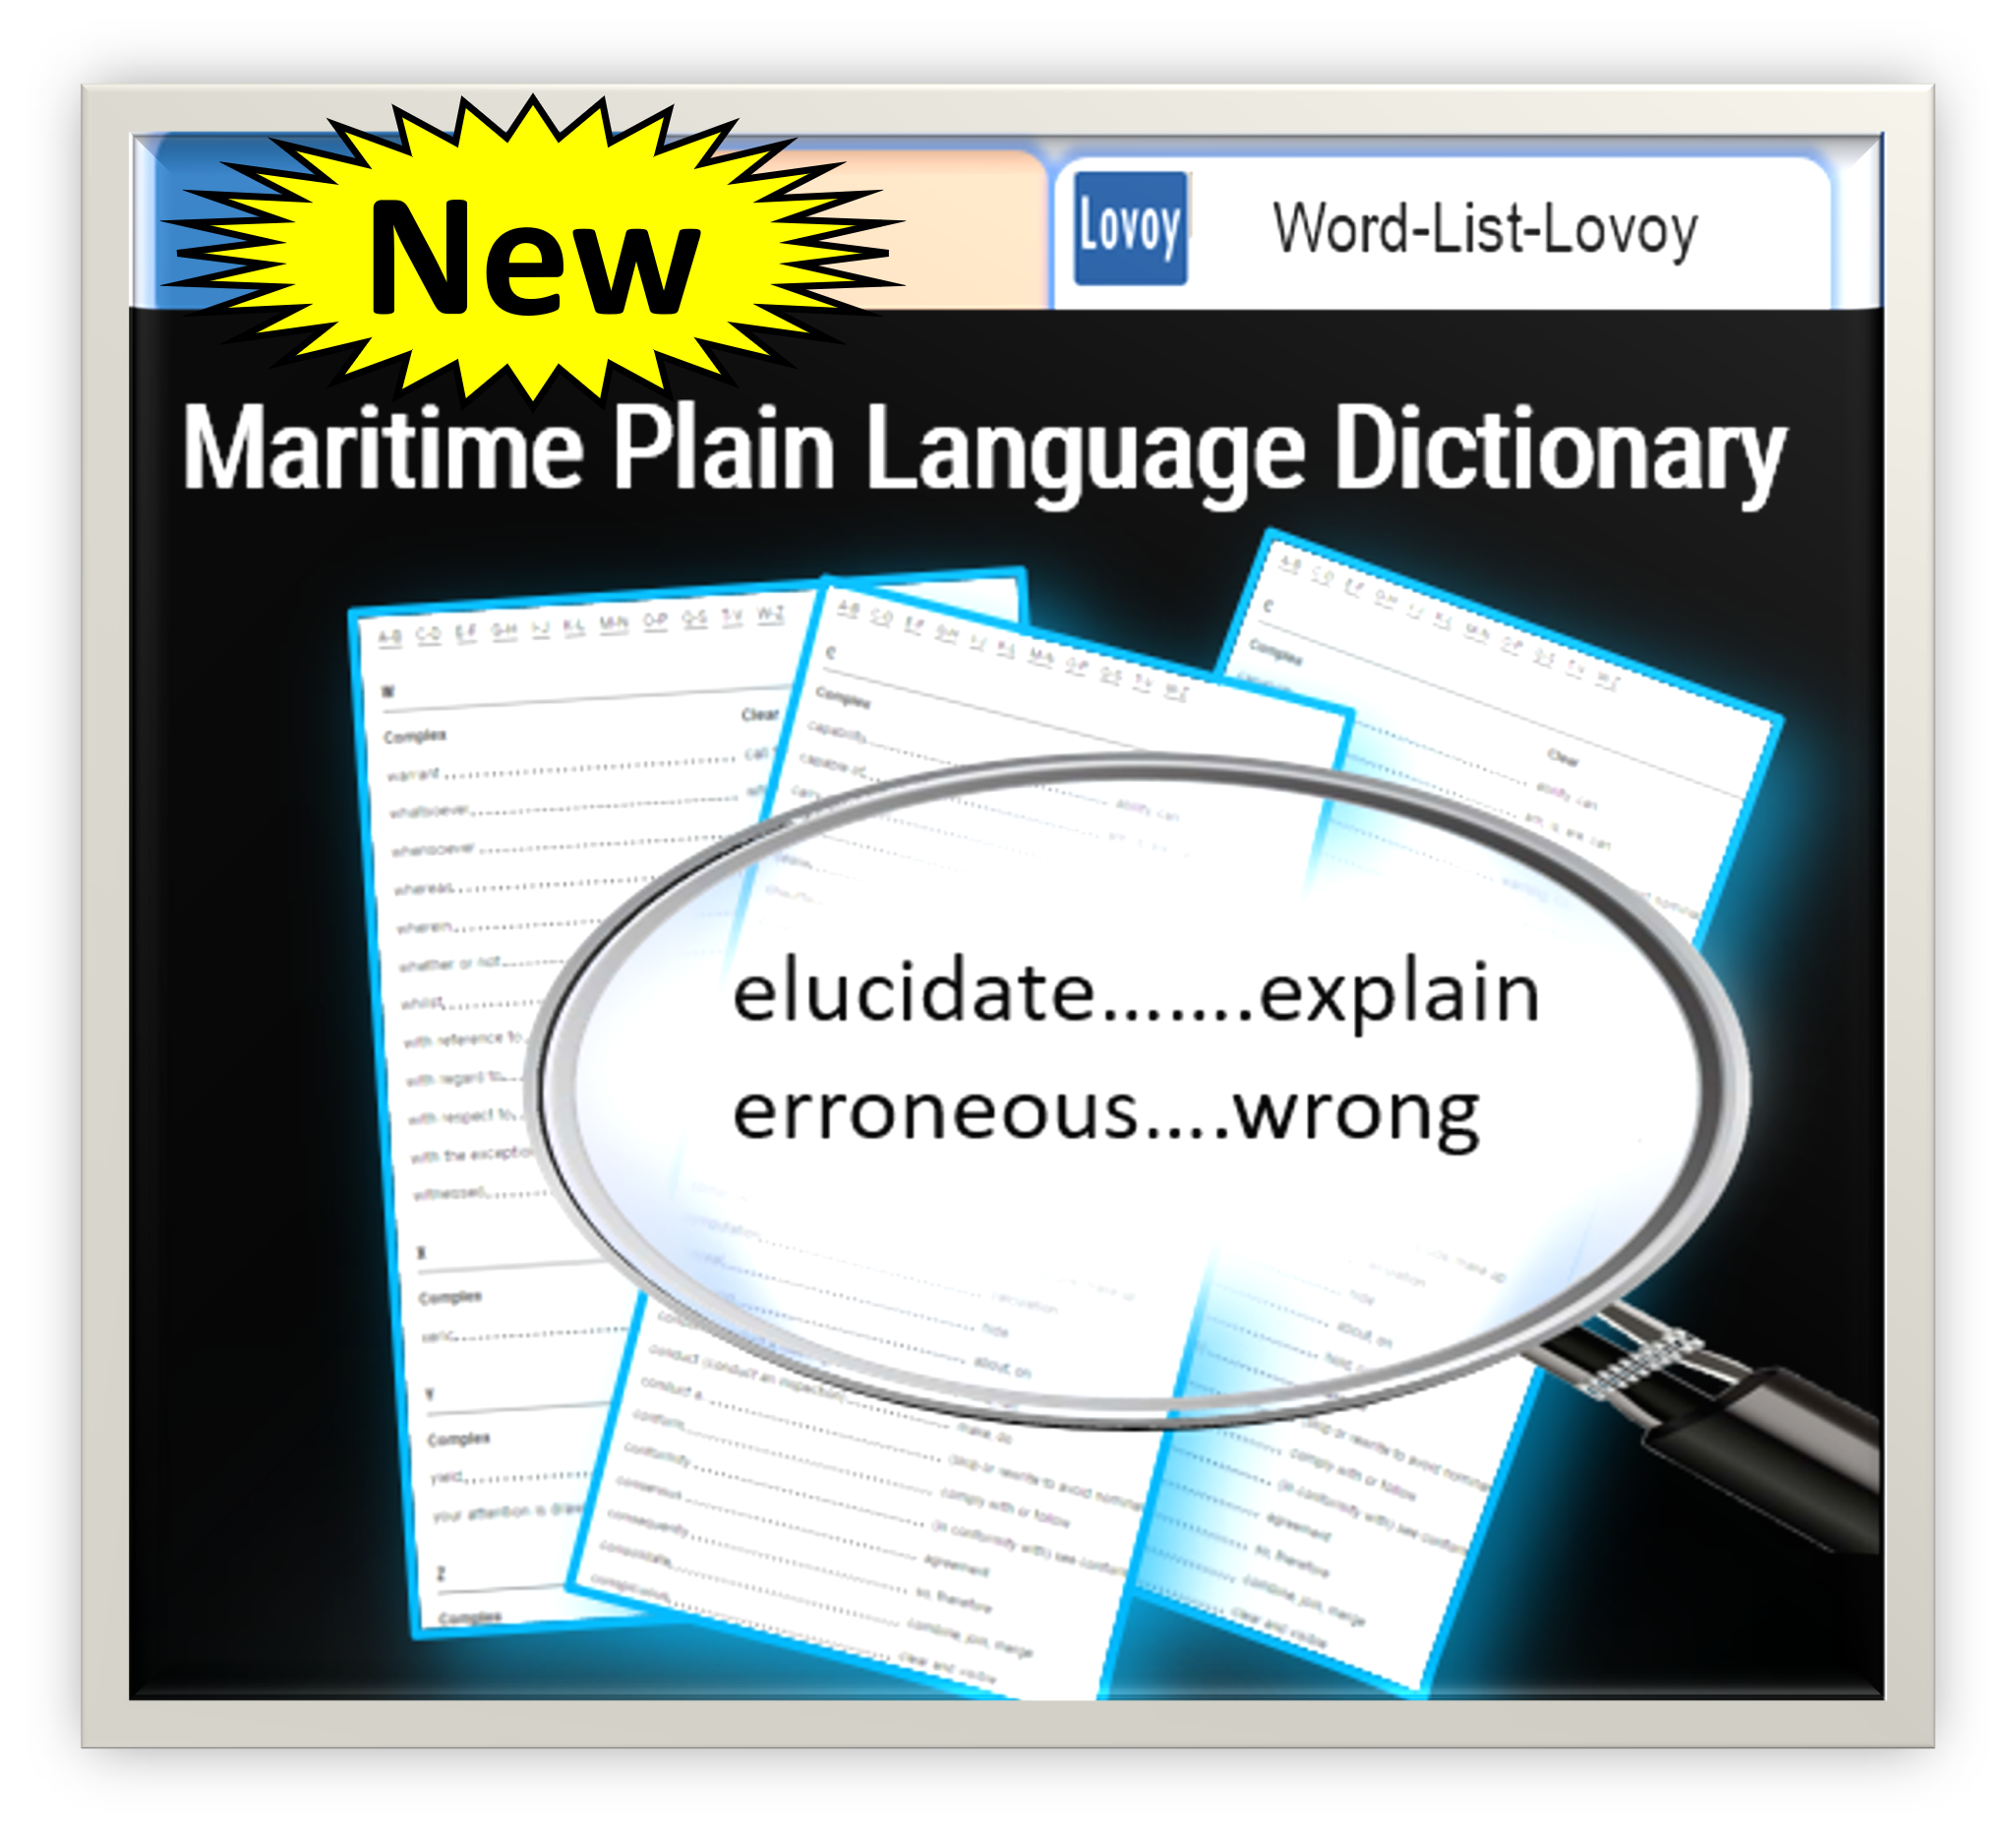 New: Maritime Plain Language Dictionary